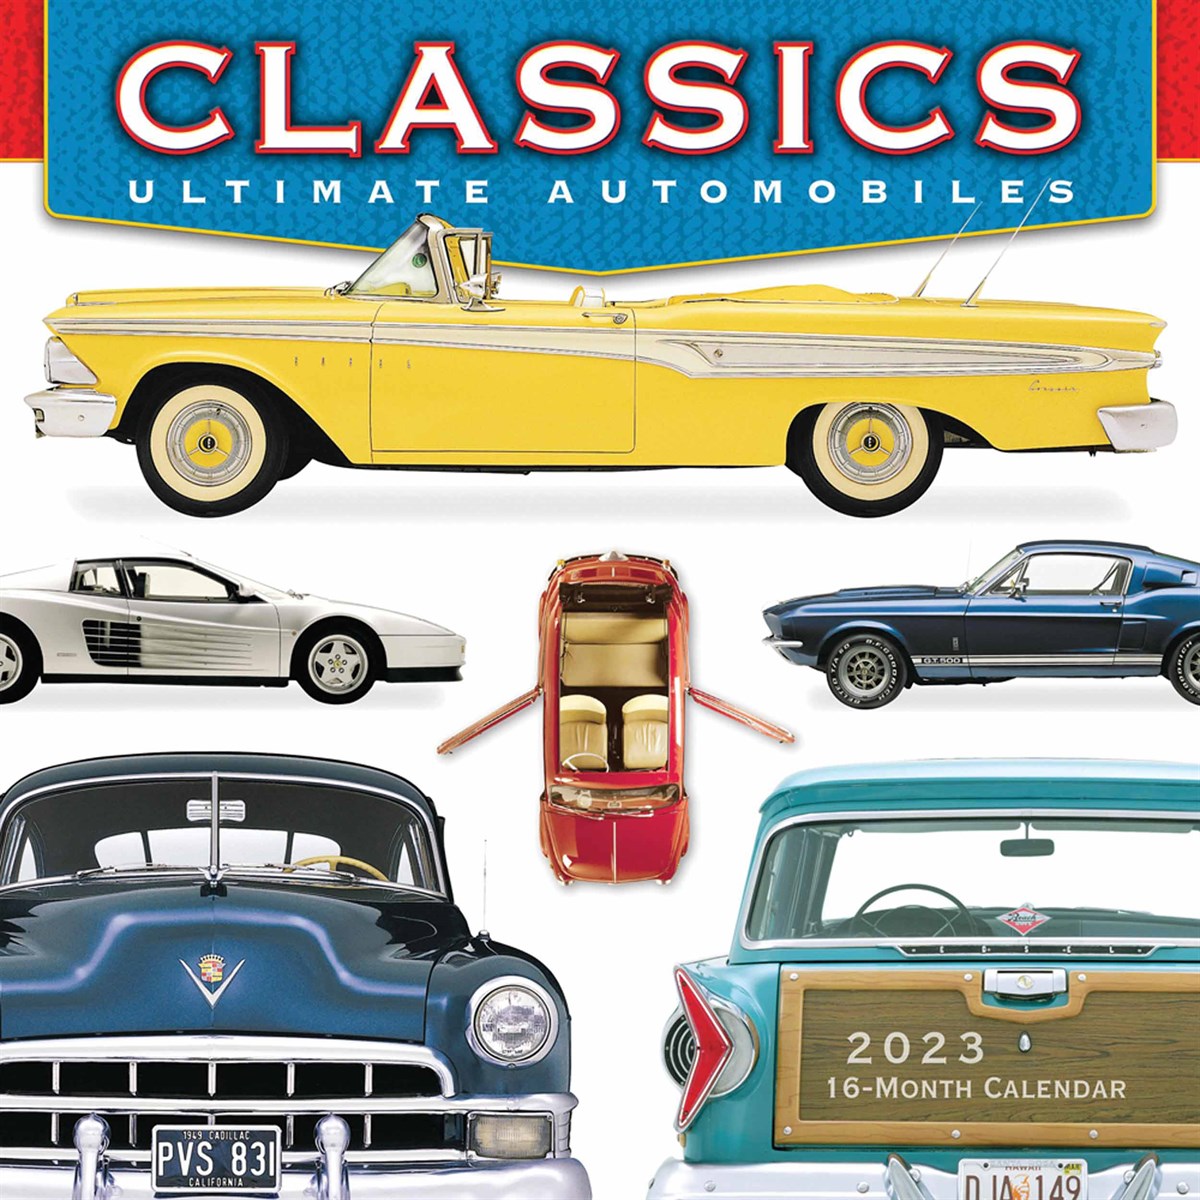 Classic Ultimate Automobiles 2023 Calendars